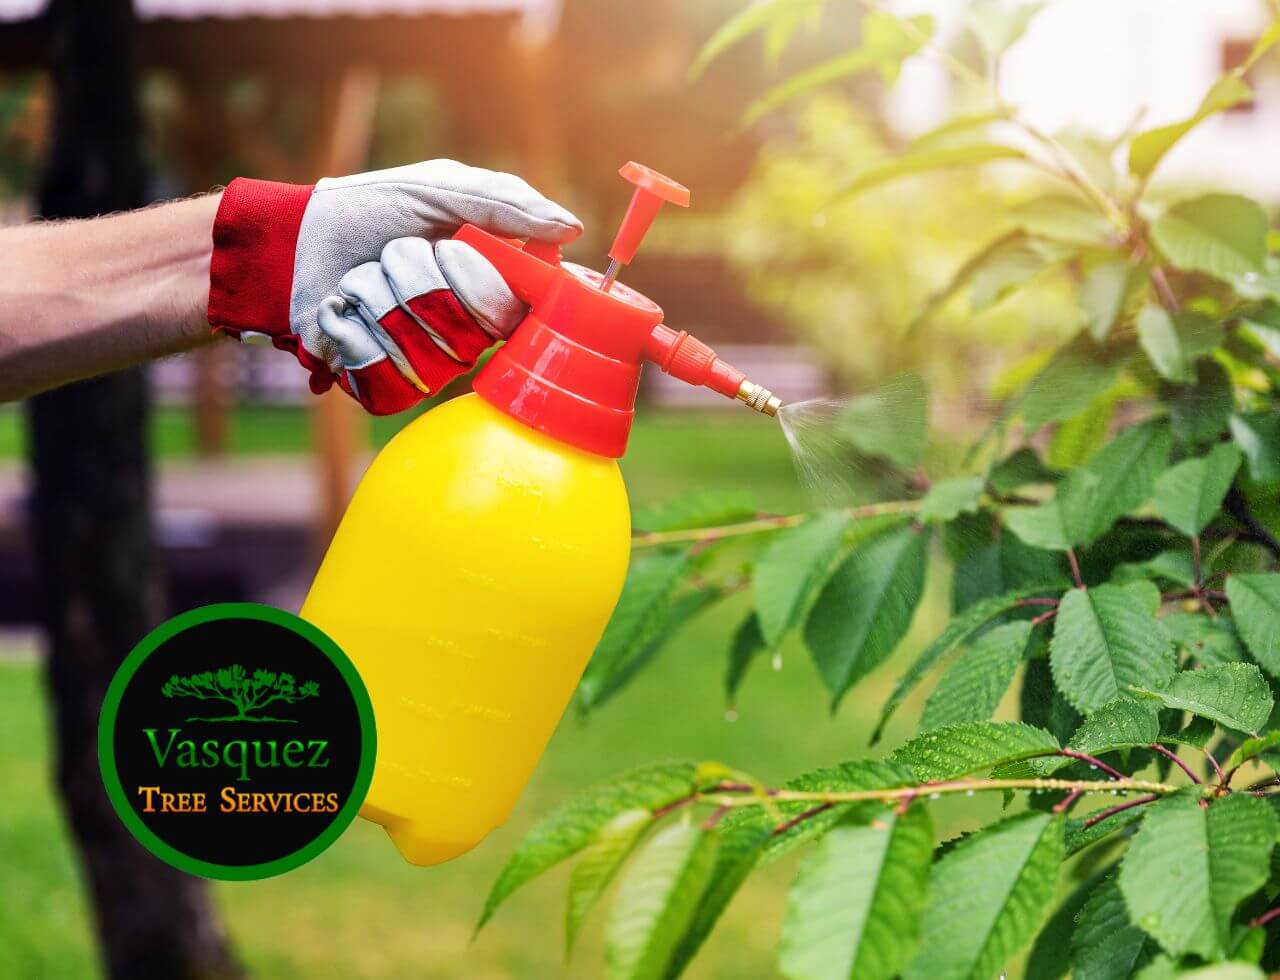 Vasquez Tree Service: Your Tree Care Partner